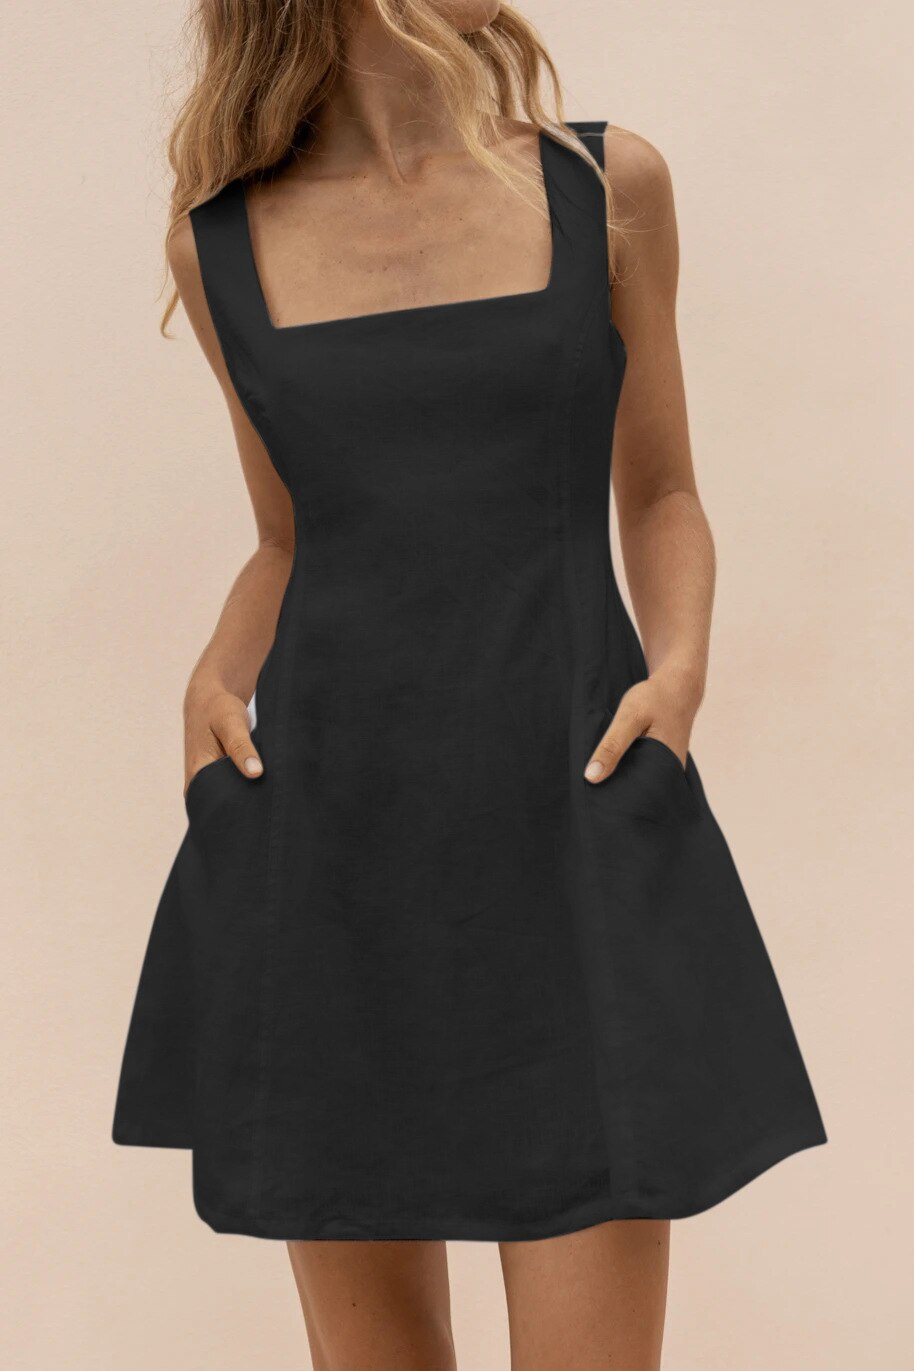 NTG Fad Dress black / S Spaghetti Strap Square Neck Casual Belted Pocket Mini Dress